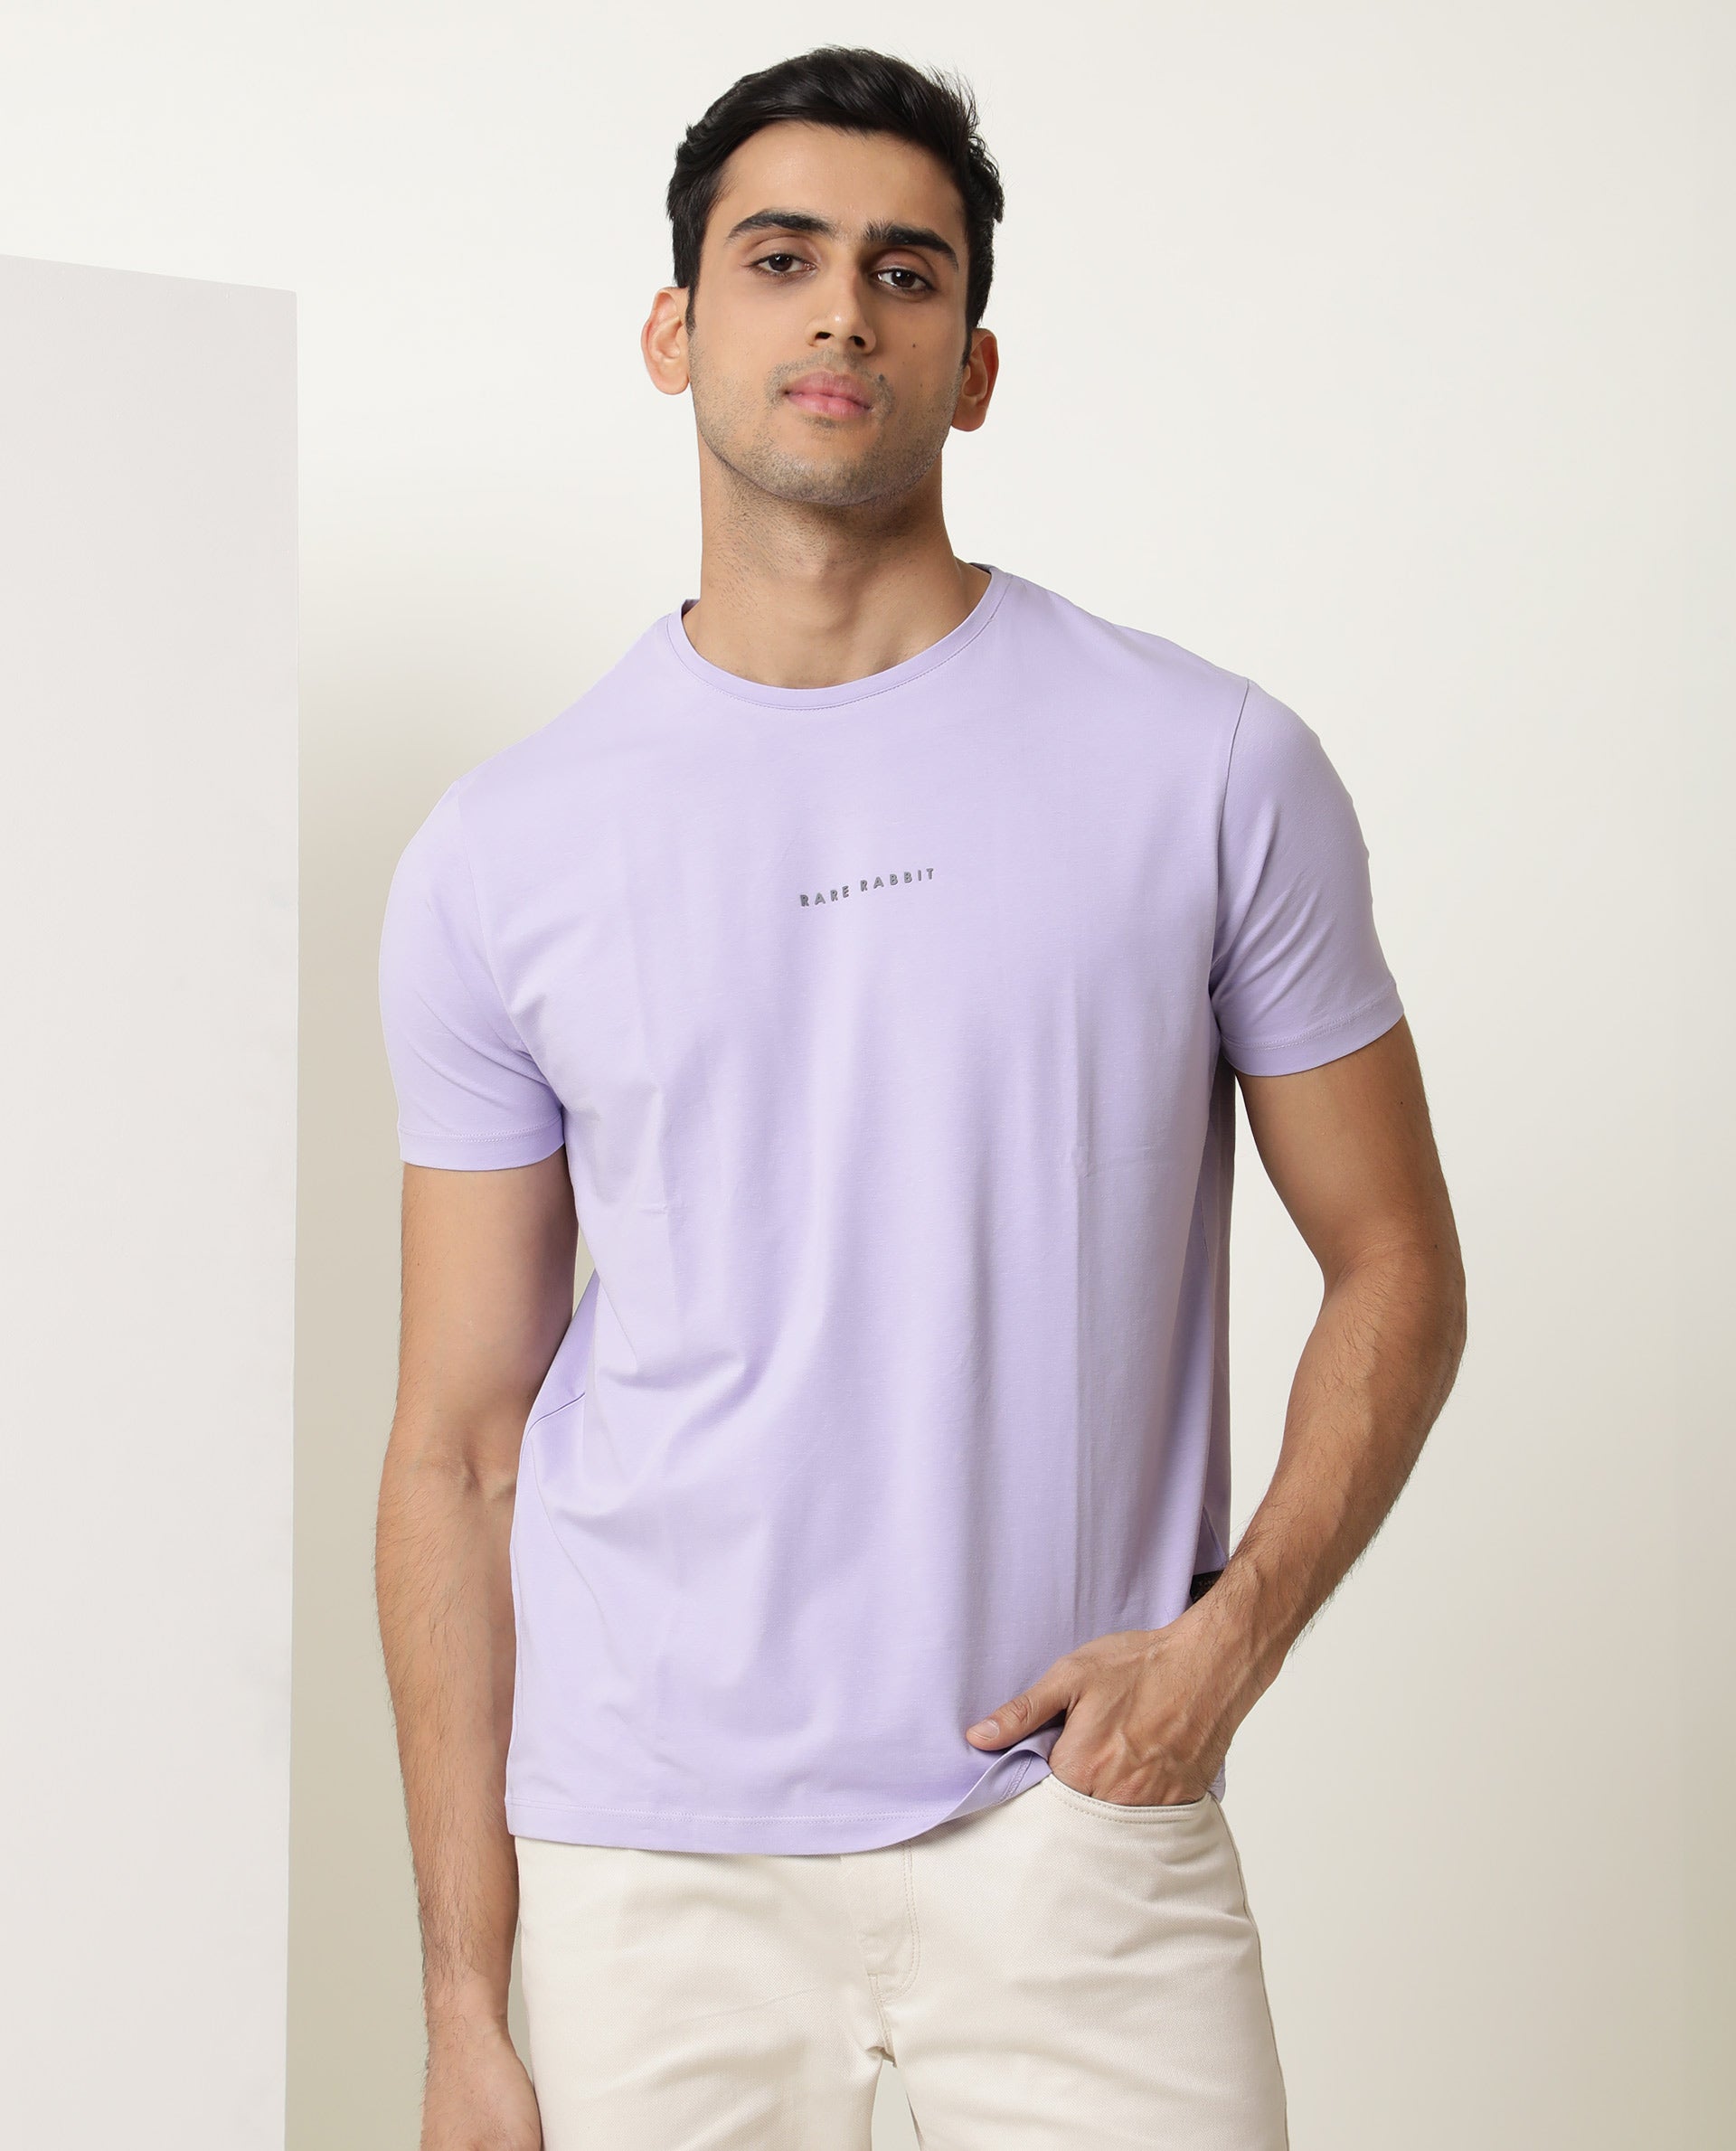 T-shirt light linen made in brazil